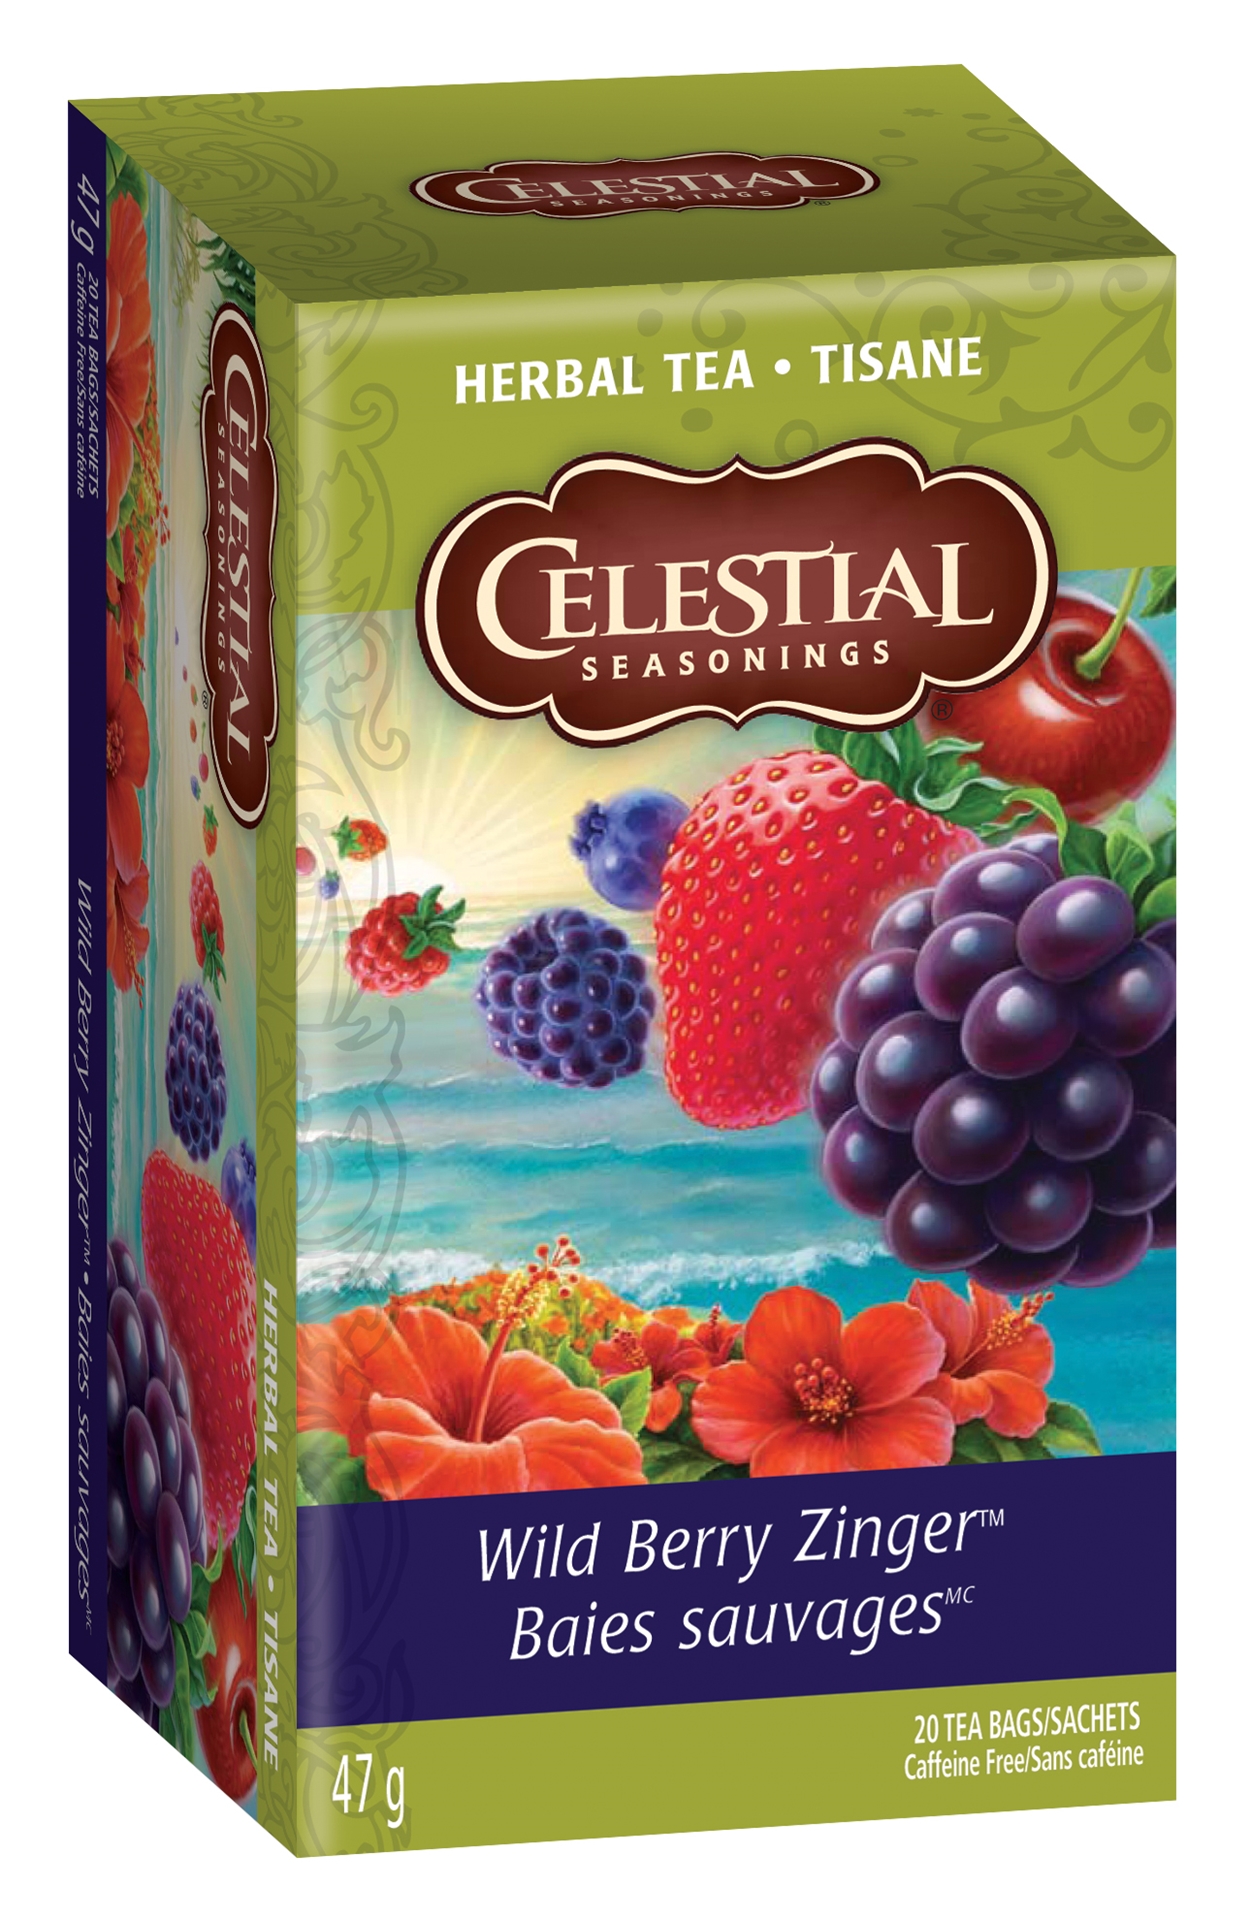 Wildberry чай. Чай Wildberries. Чай Саваж. Berry Red Zinger чай. Купить чай на wildberries